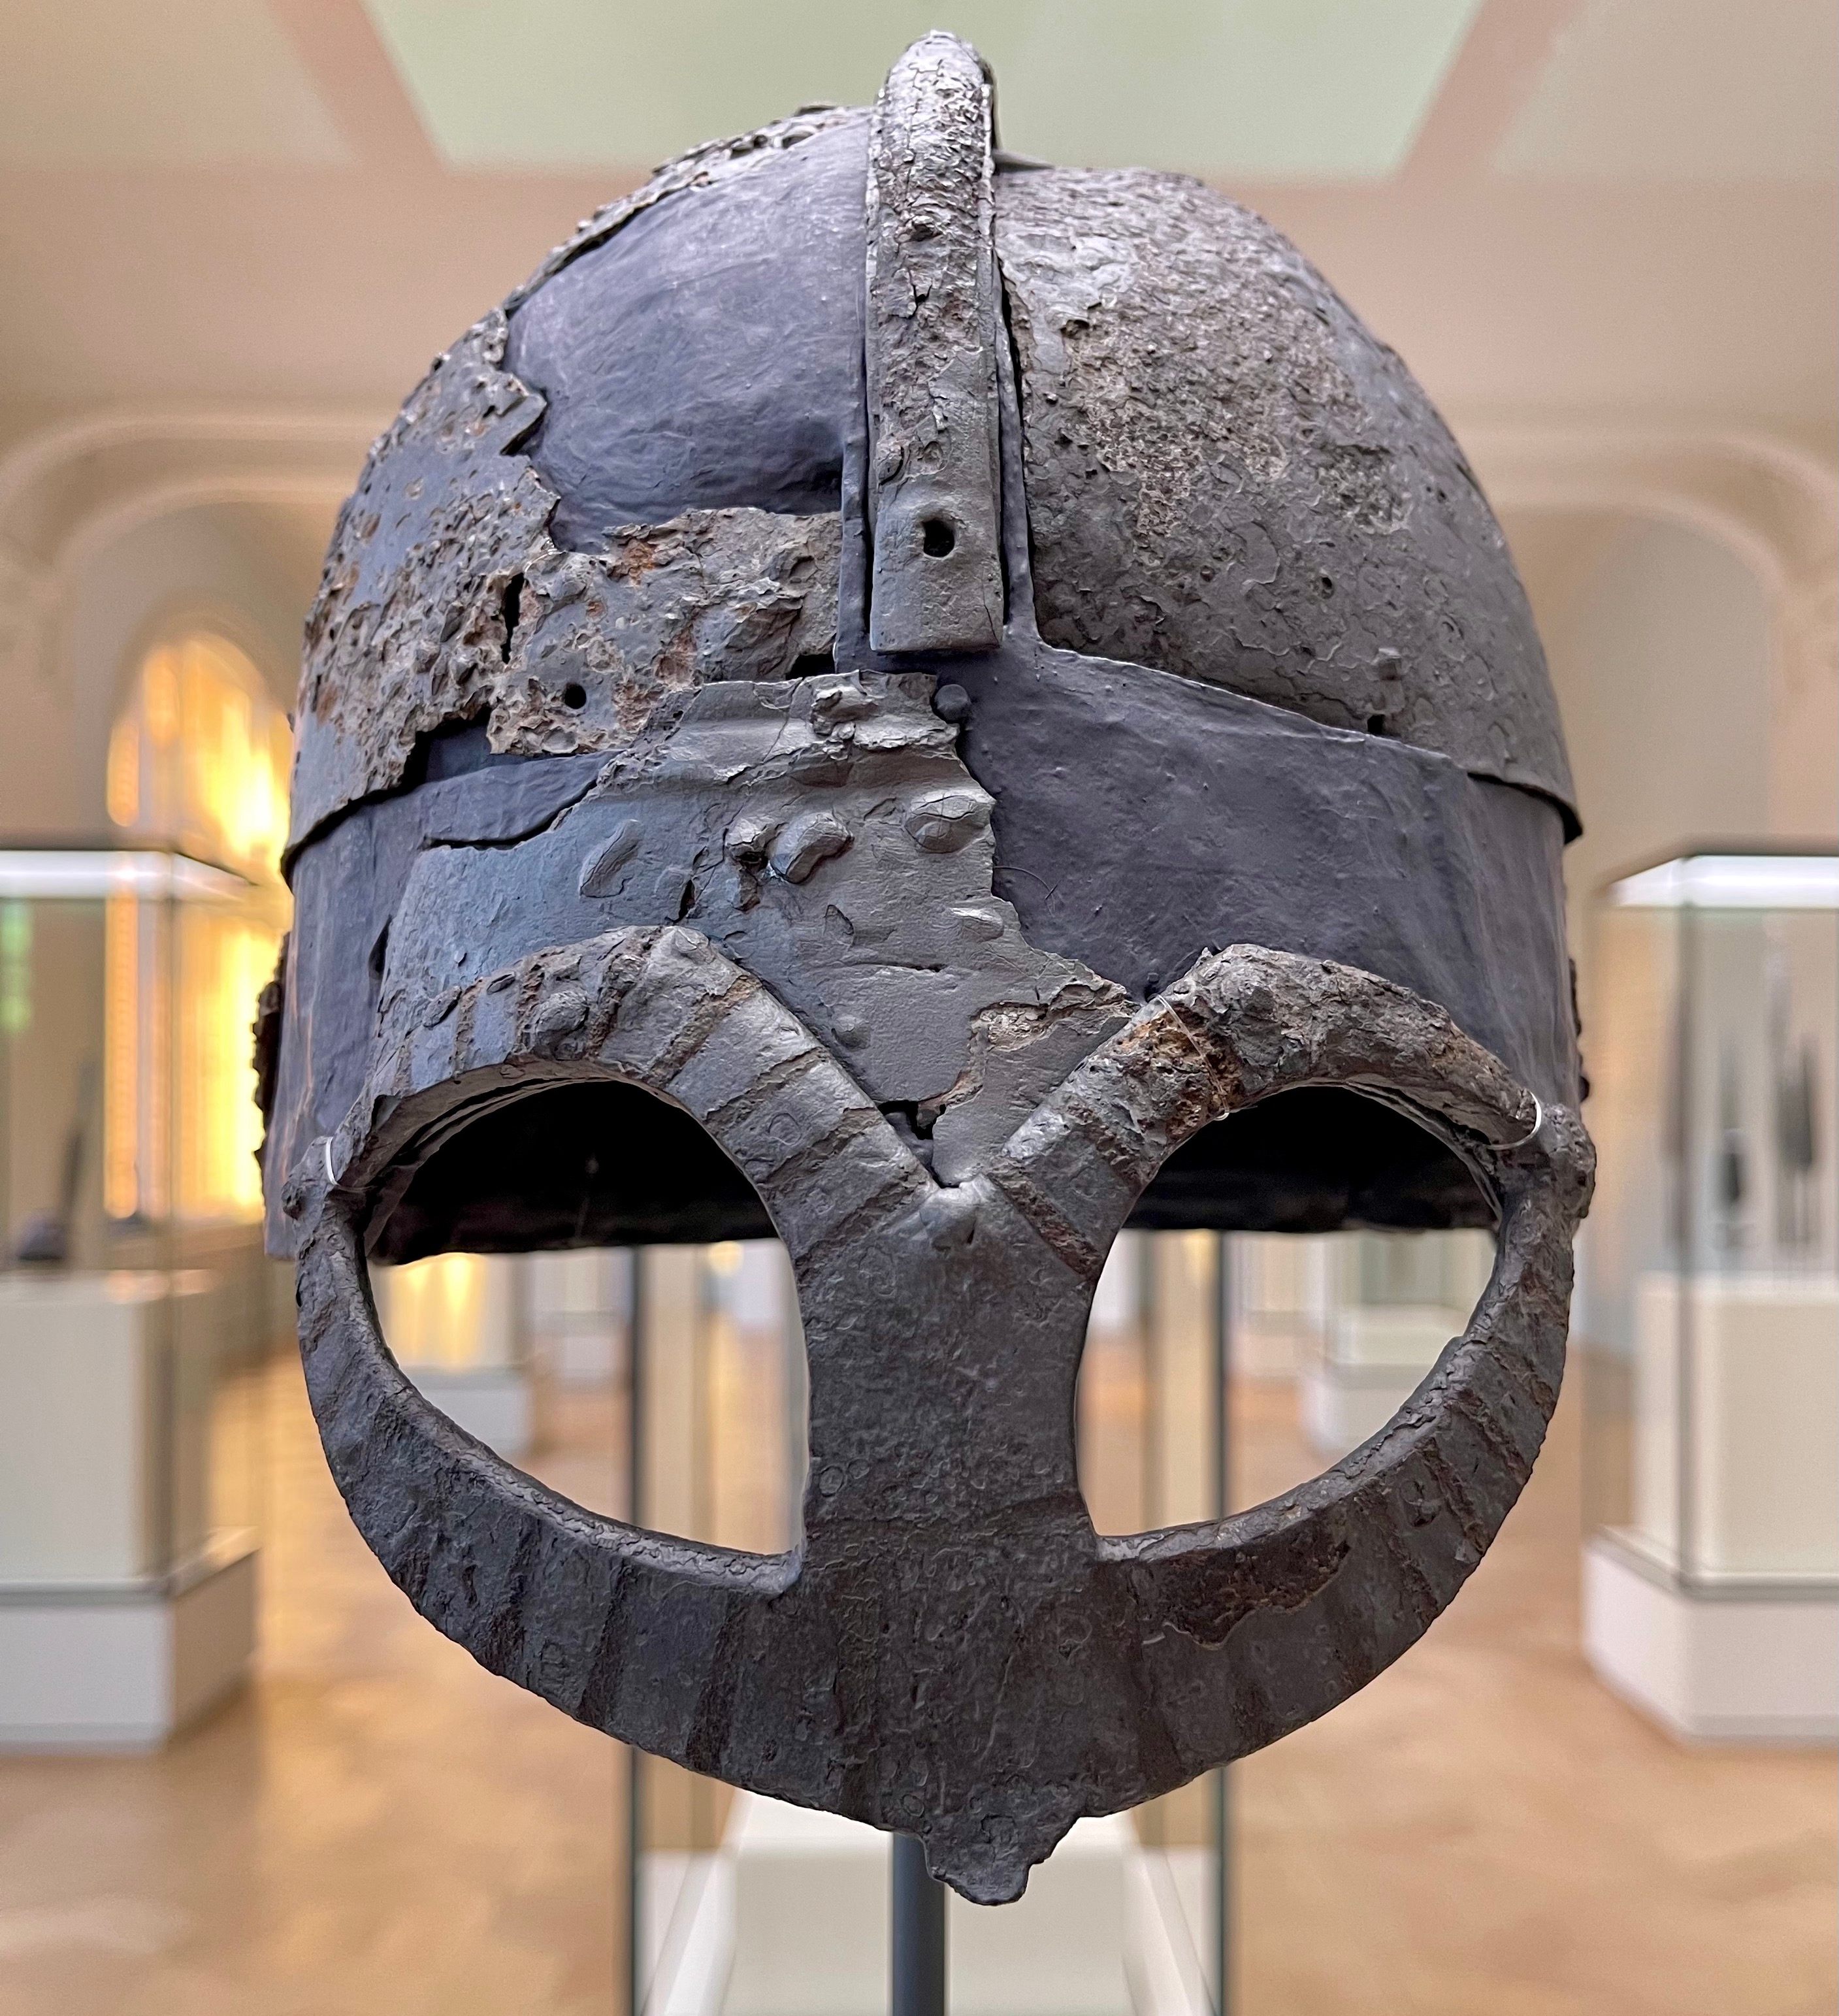 Known as the Gjermundbu helmet, this is the best preserved Viking helmet ever discovered.